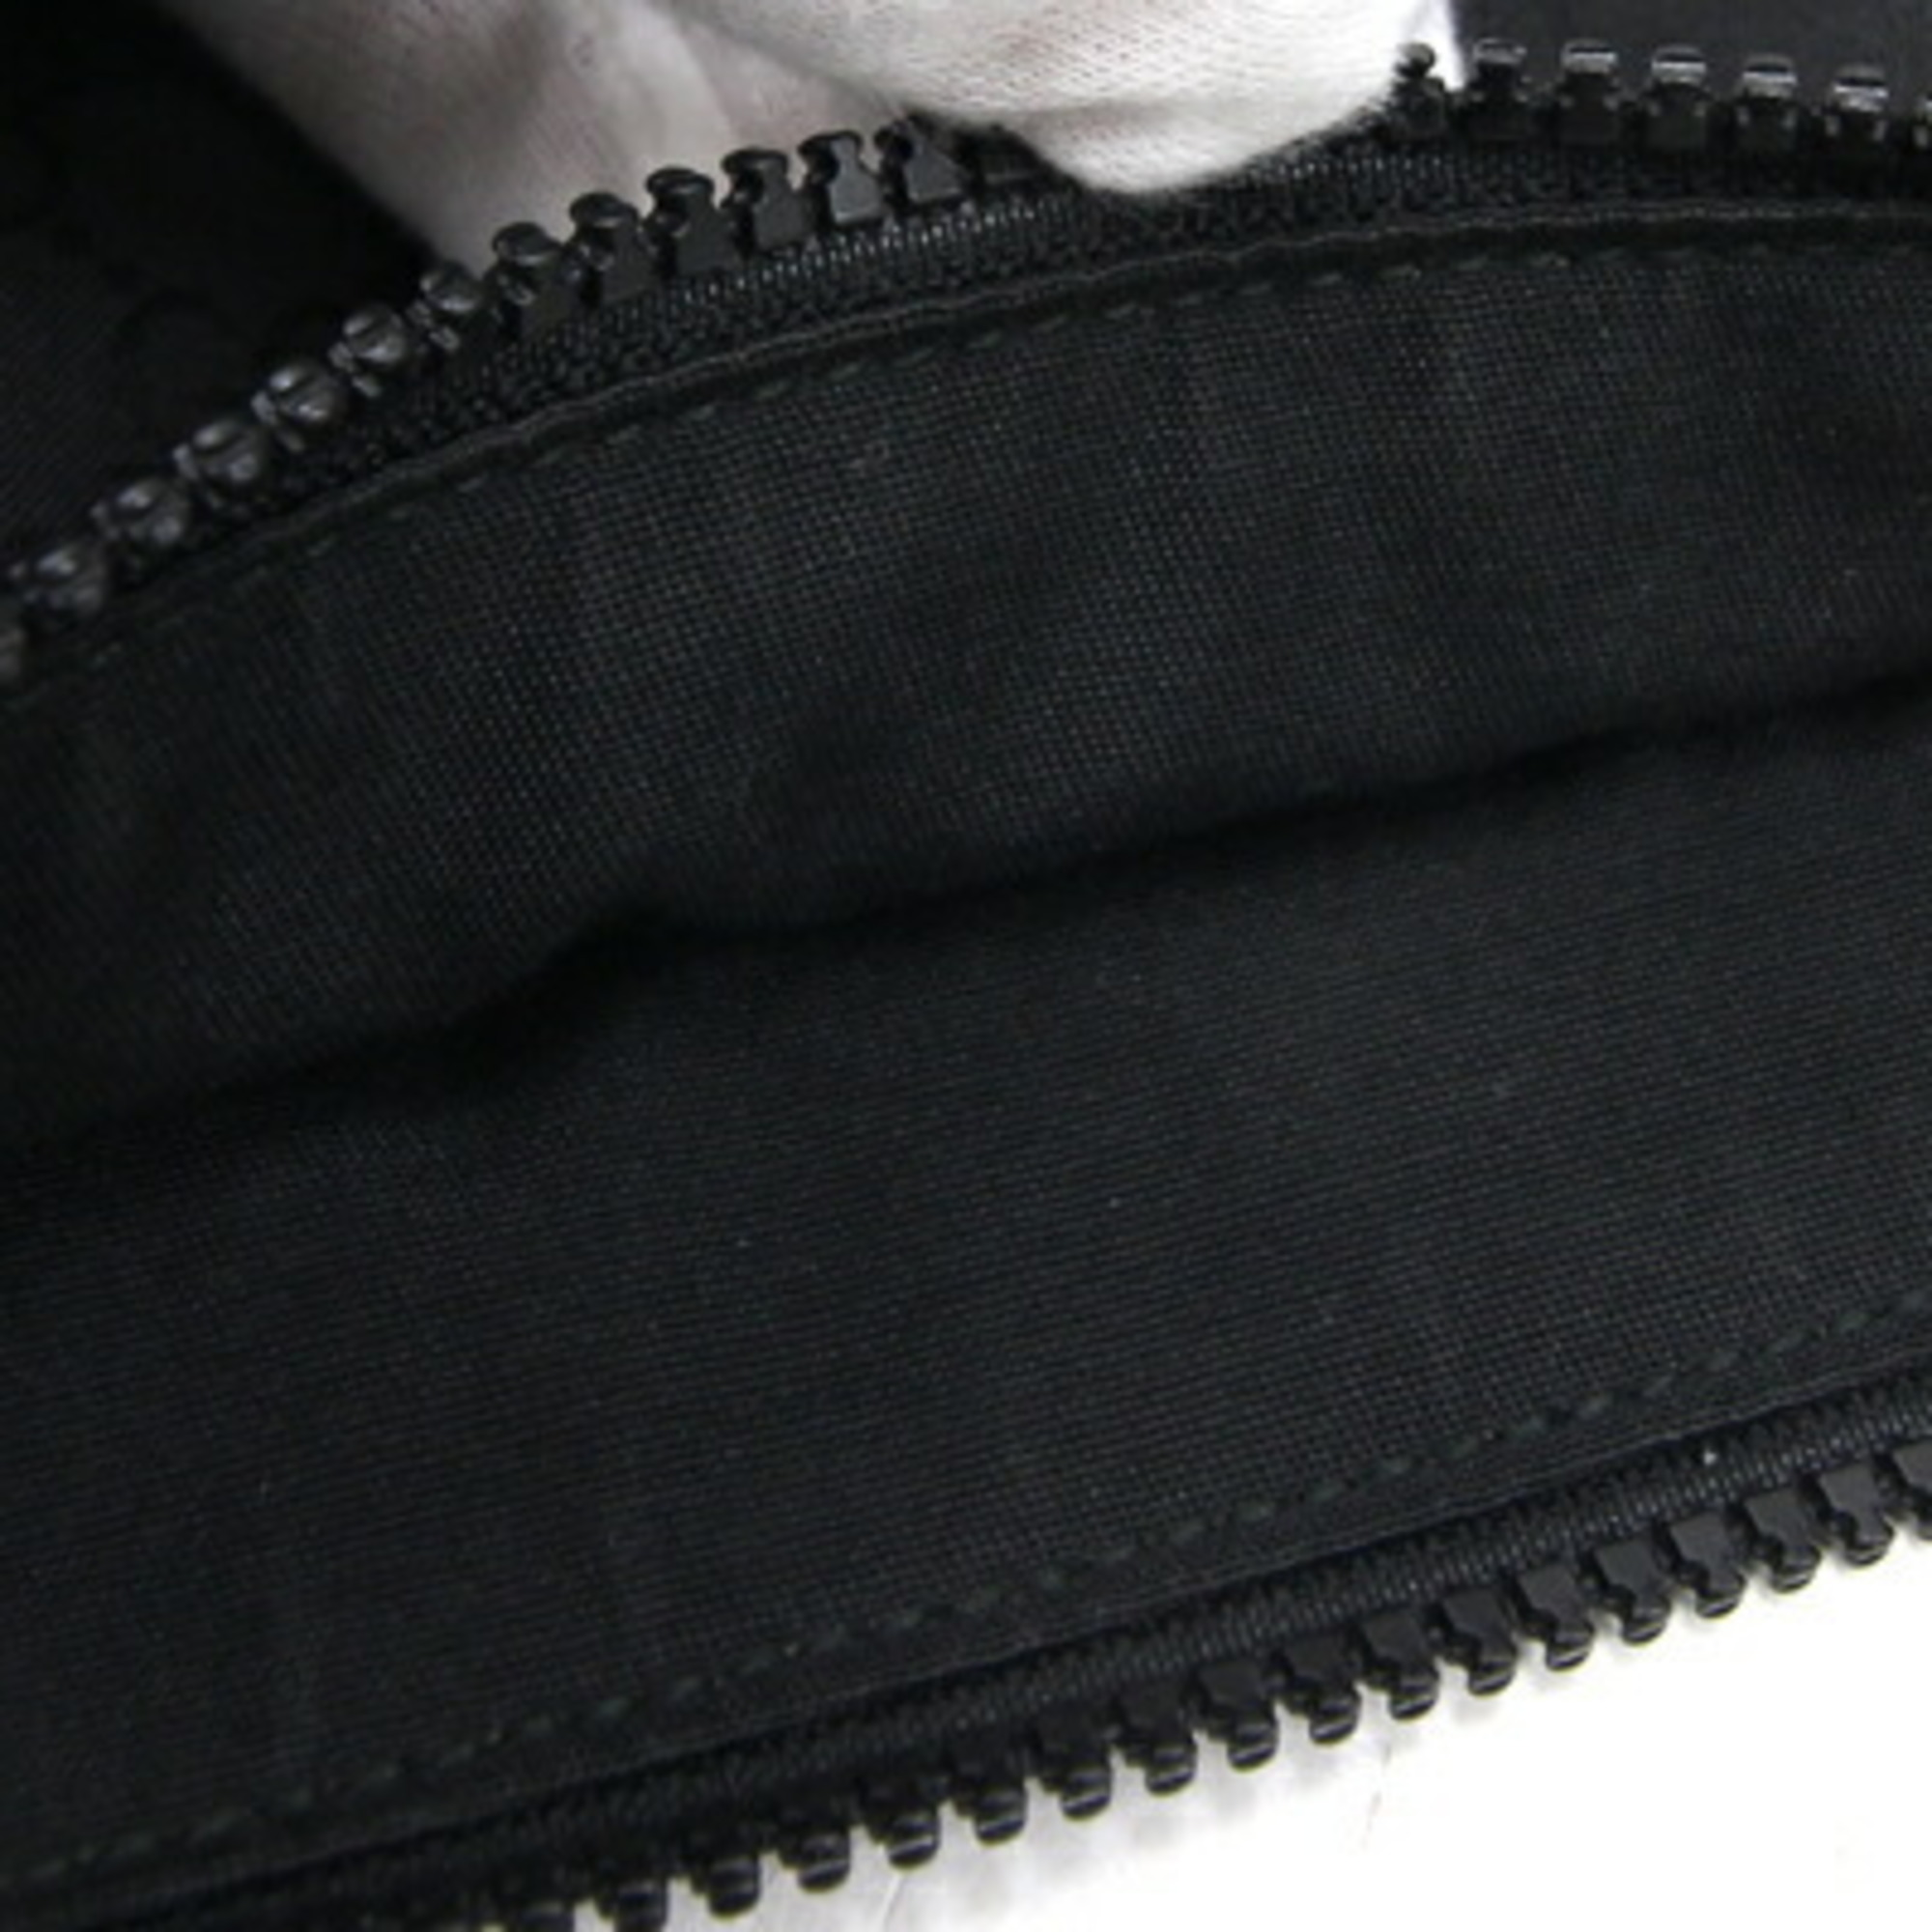 Gucci Shoulder Bag GG 449183 Black Nylon Canvas Leather No Gusset Sacoche Pochette Women Men GUCCI